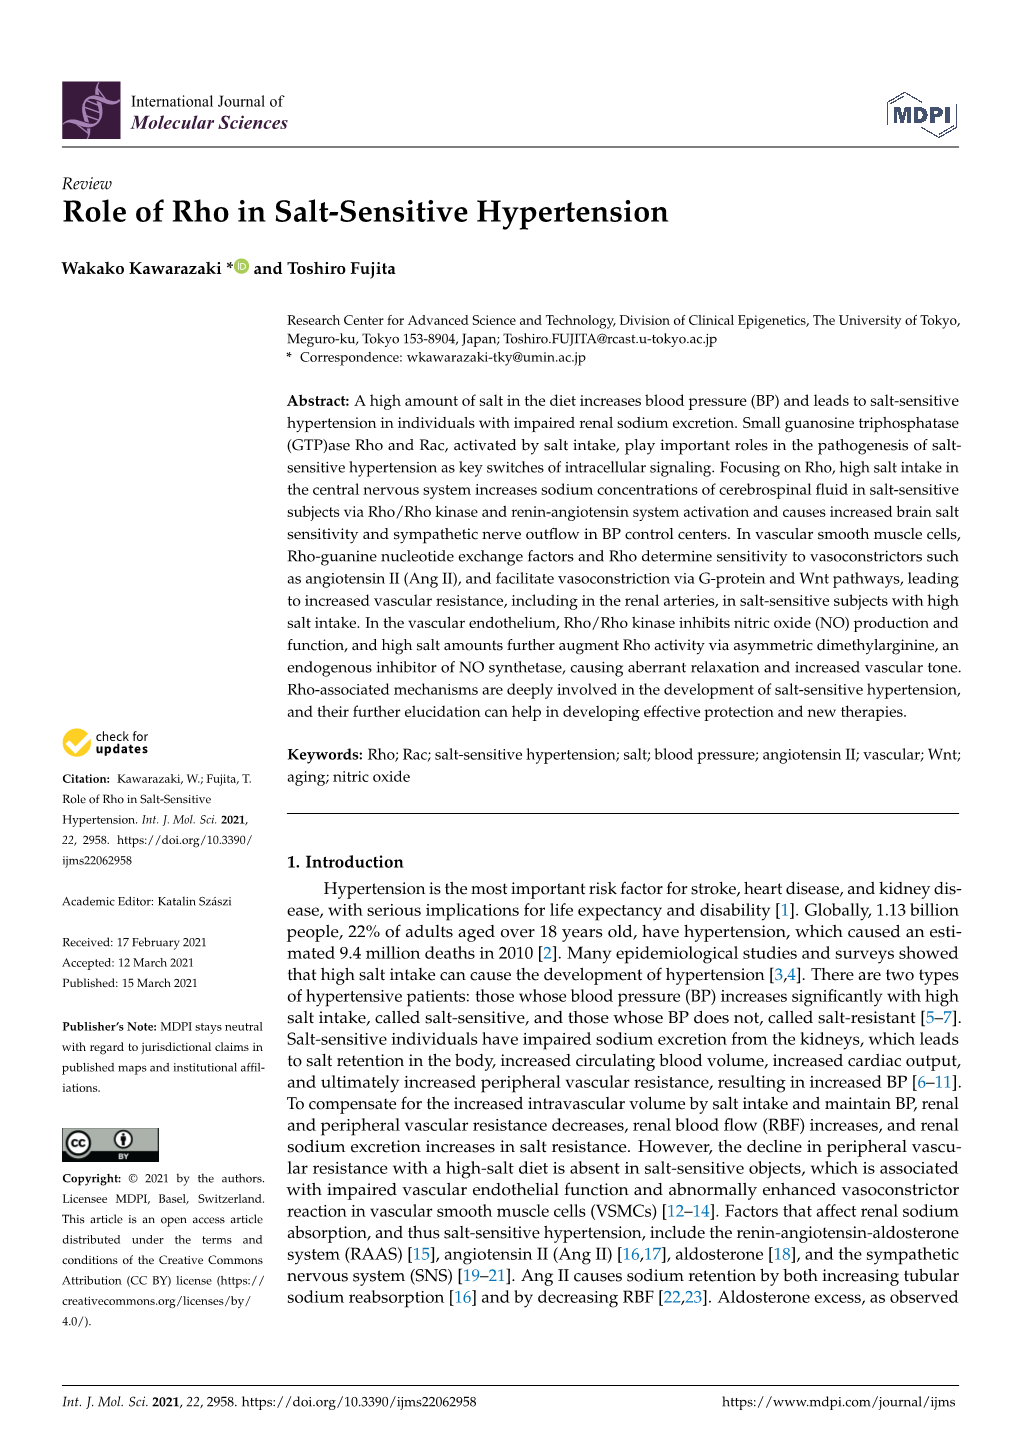 Role of Rho in Salt-Sensitive Hypertension